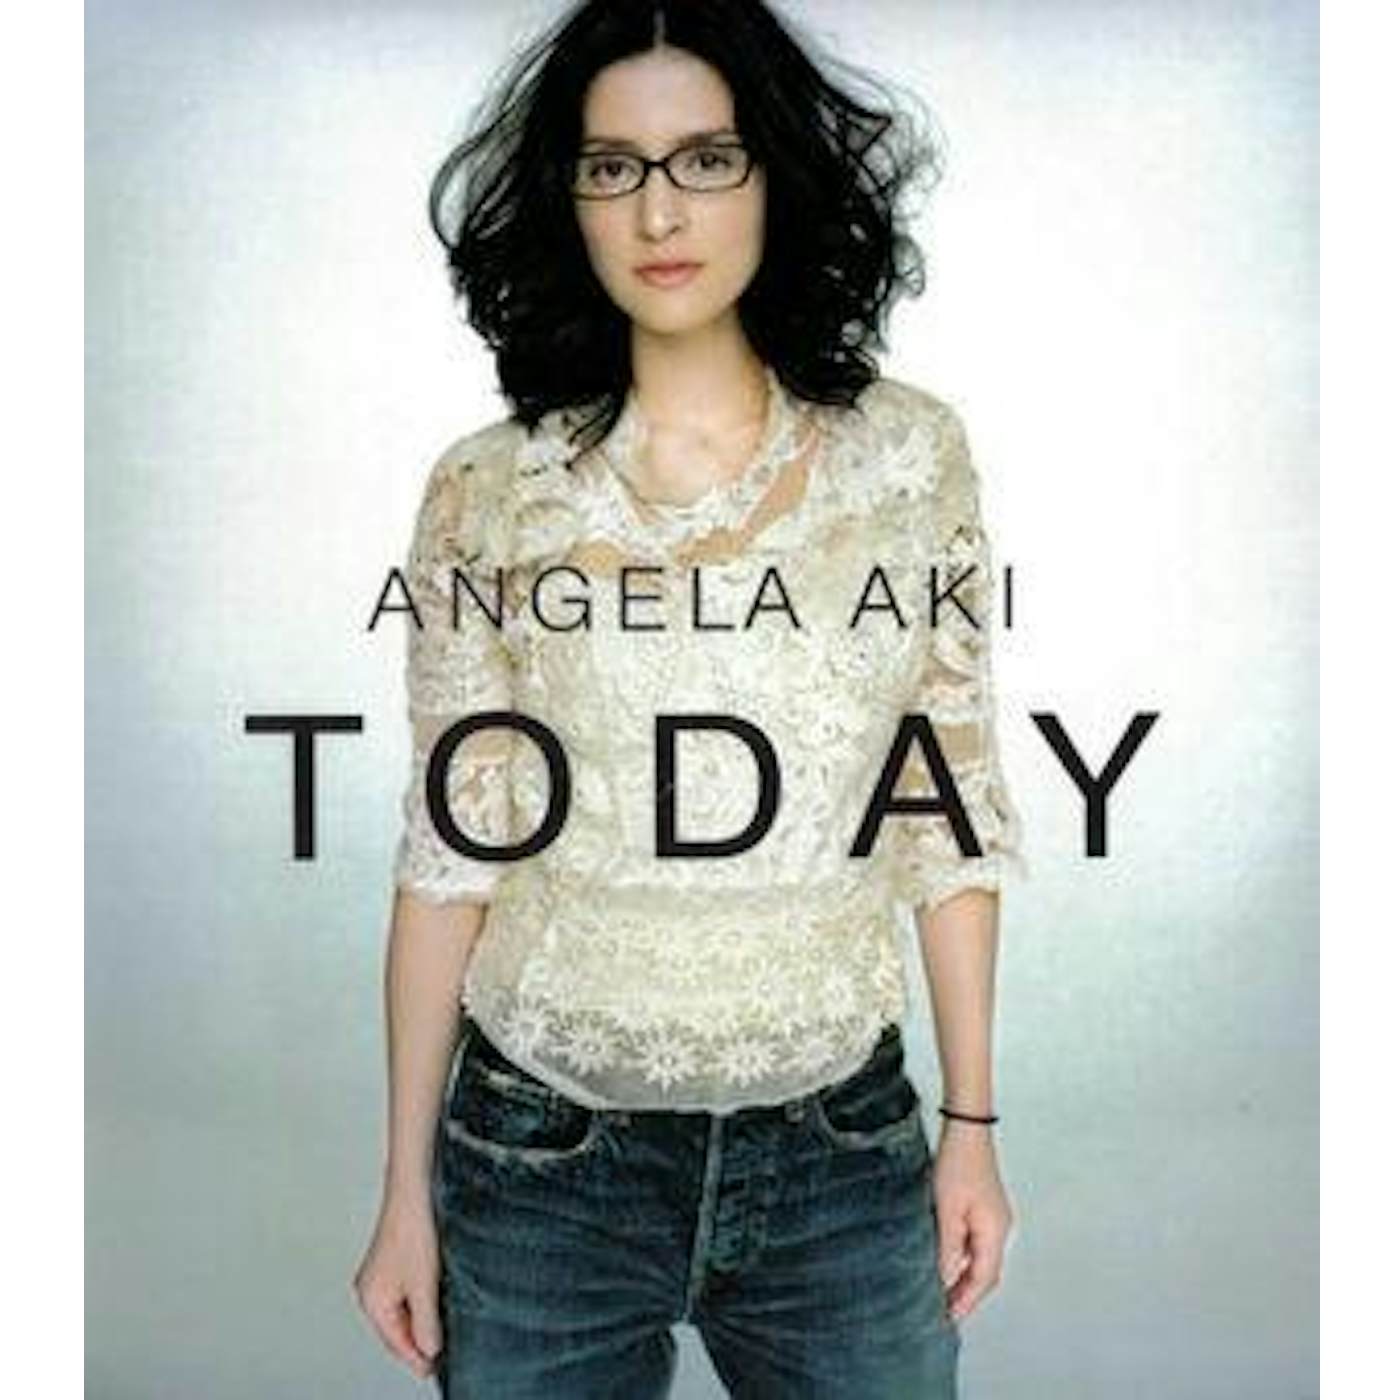 Angela Aki TODAY CD